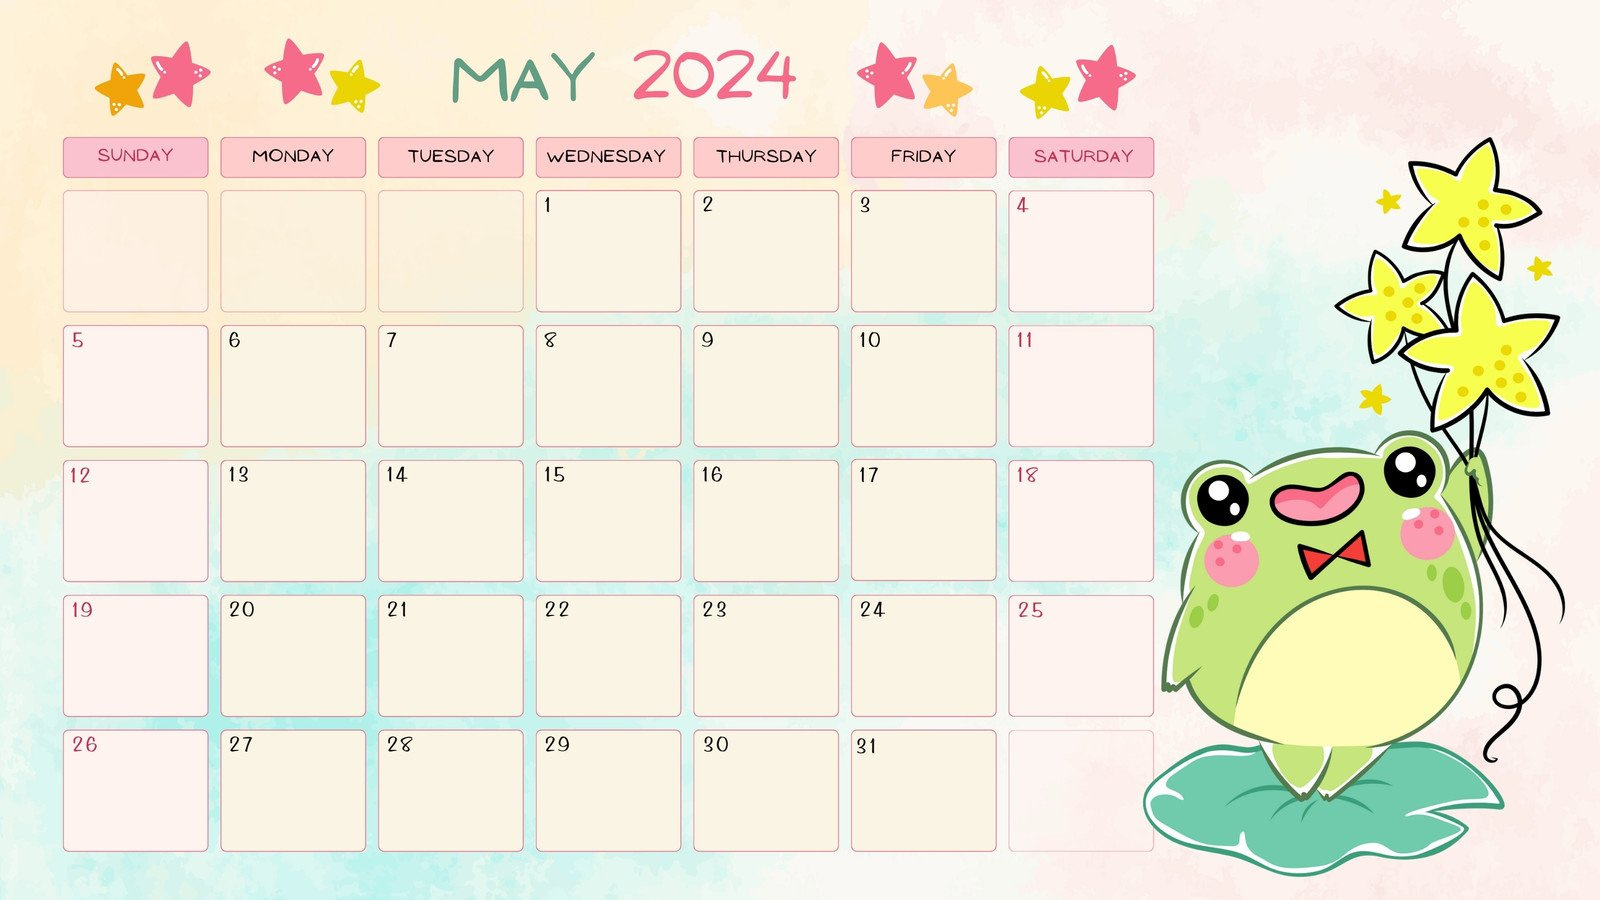 Free And Customizable Calendar Templates | Canva for Free Printable Calendar 2024 May Calendar Lab